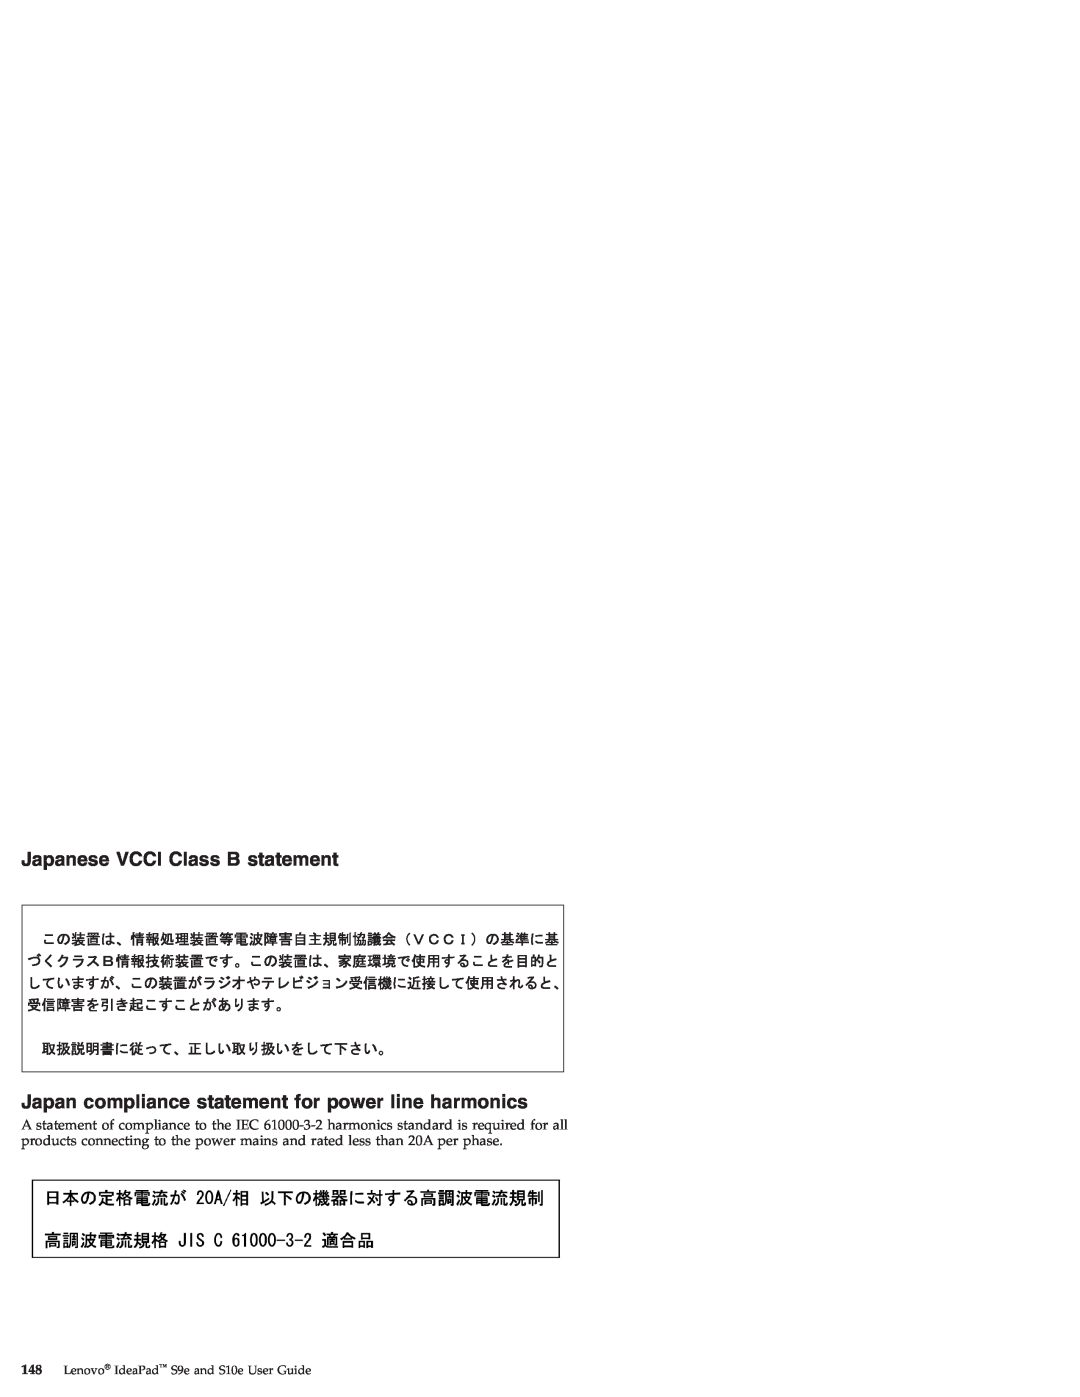 Lenovo S10E, S9E manual Japanese VCCI Class B statement, Japan compliance statement for power line harmonics 